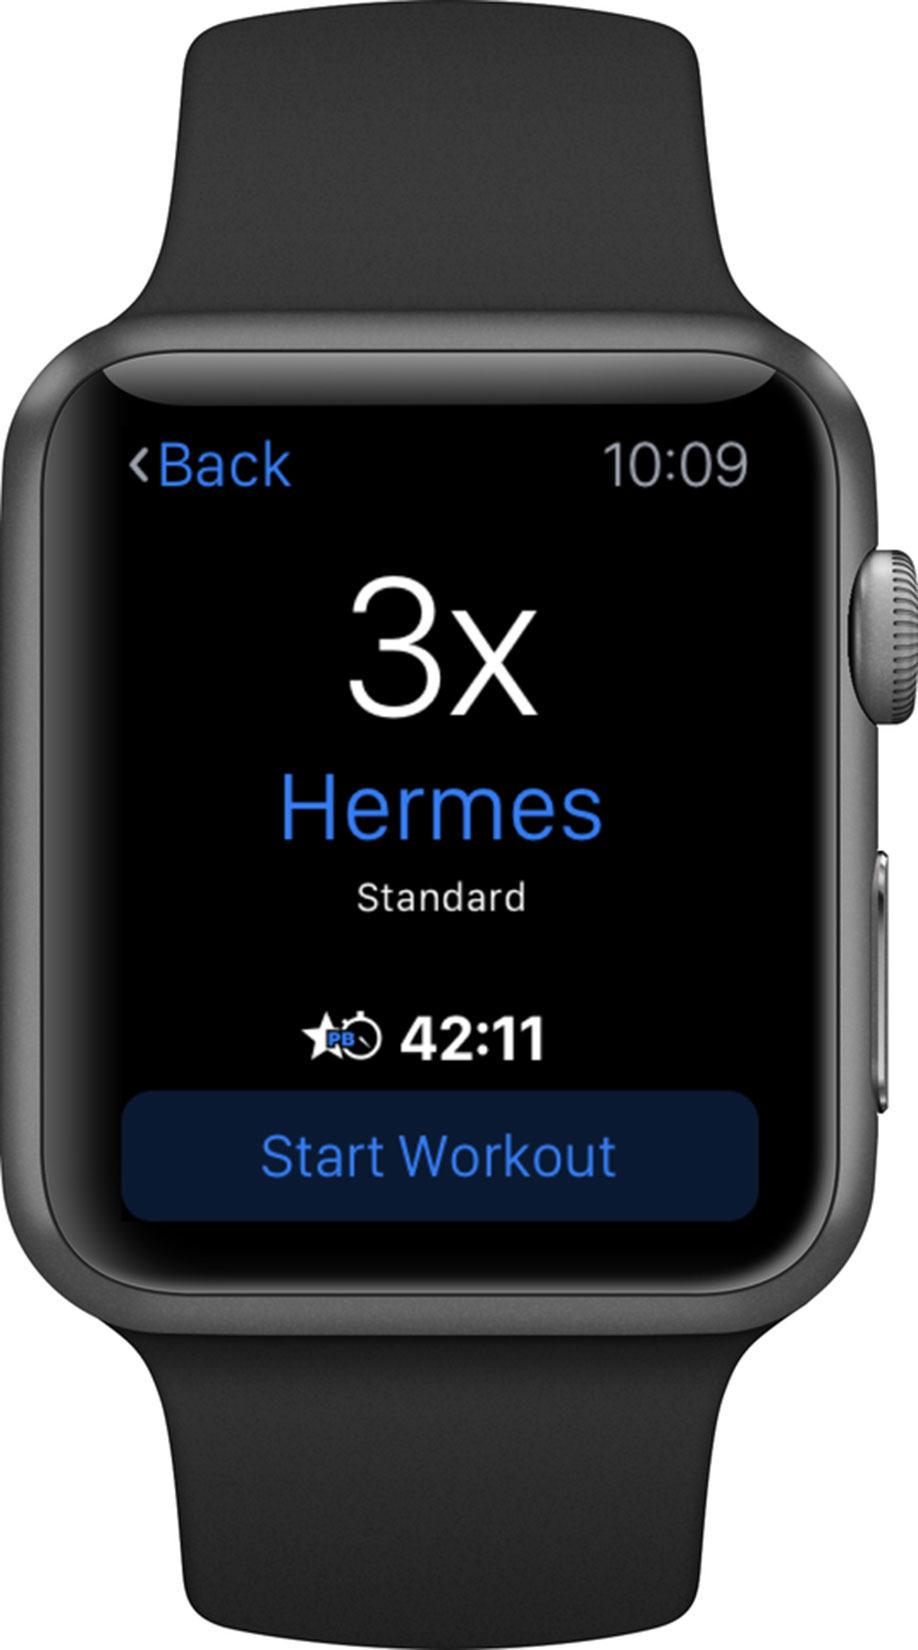 Freeletics works your Apple Watch.